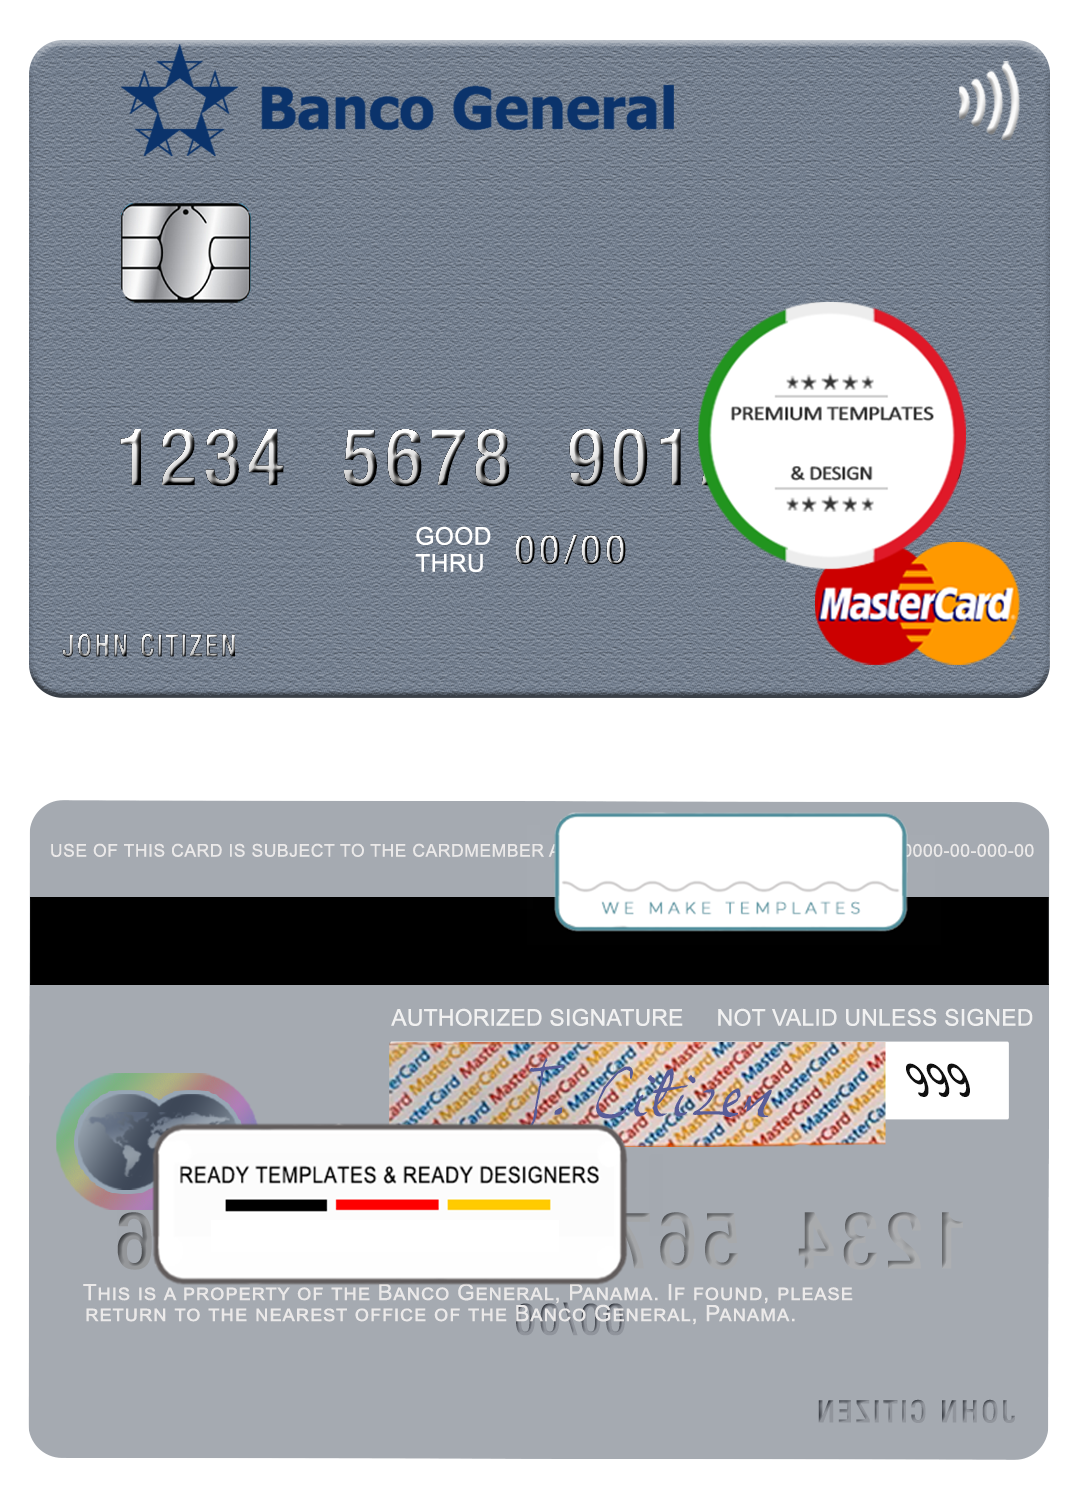 Panama Banco General mastercard, fully editable template in PSD format ...